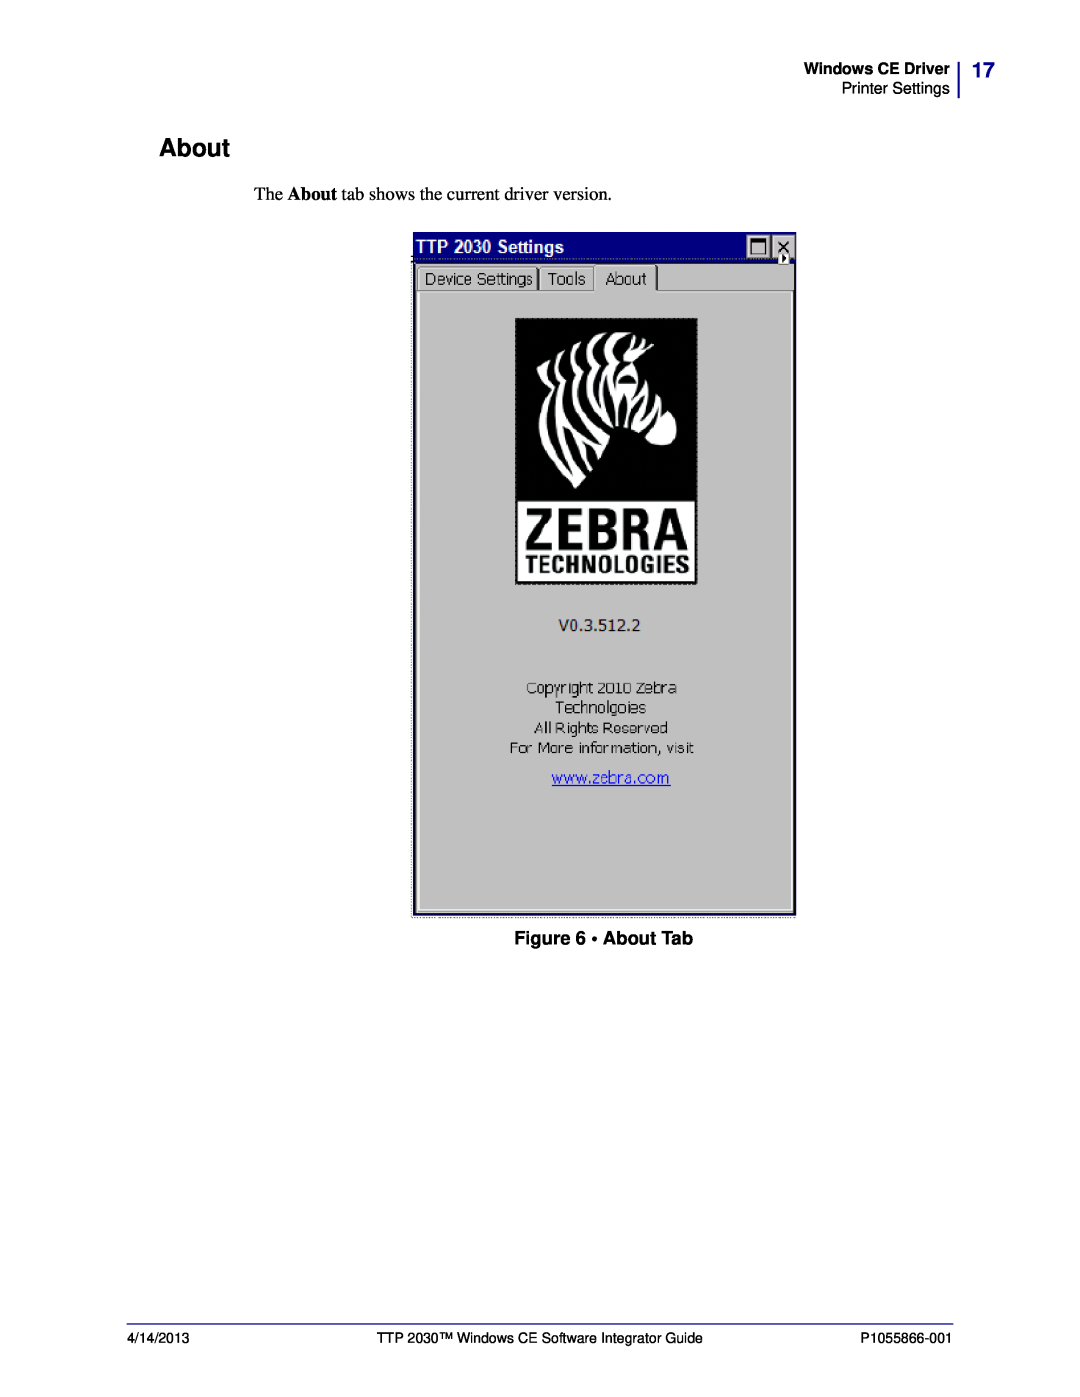 Zebra Technologies manual About Tab, Windows CE Driver, Printer Settings, TTP 2030 Windows CE Software Integrator Guide 